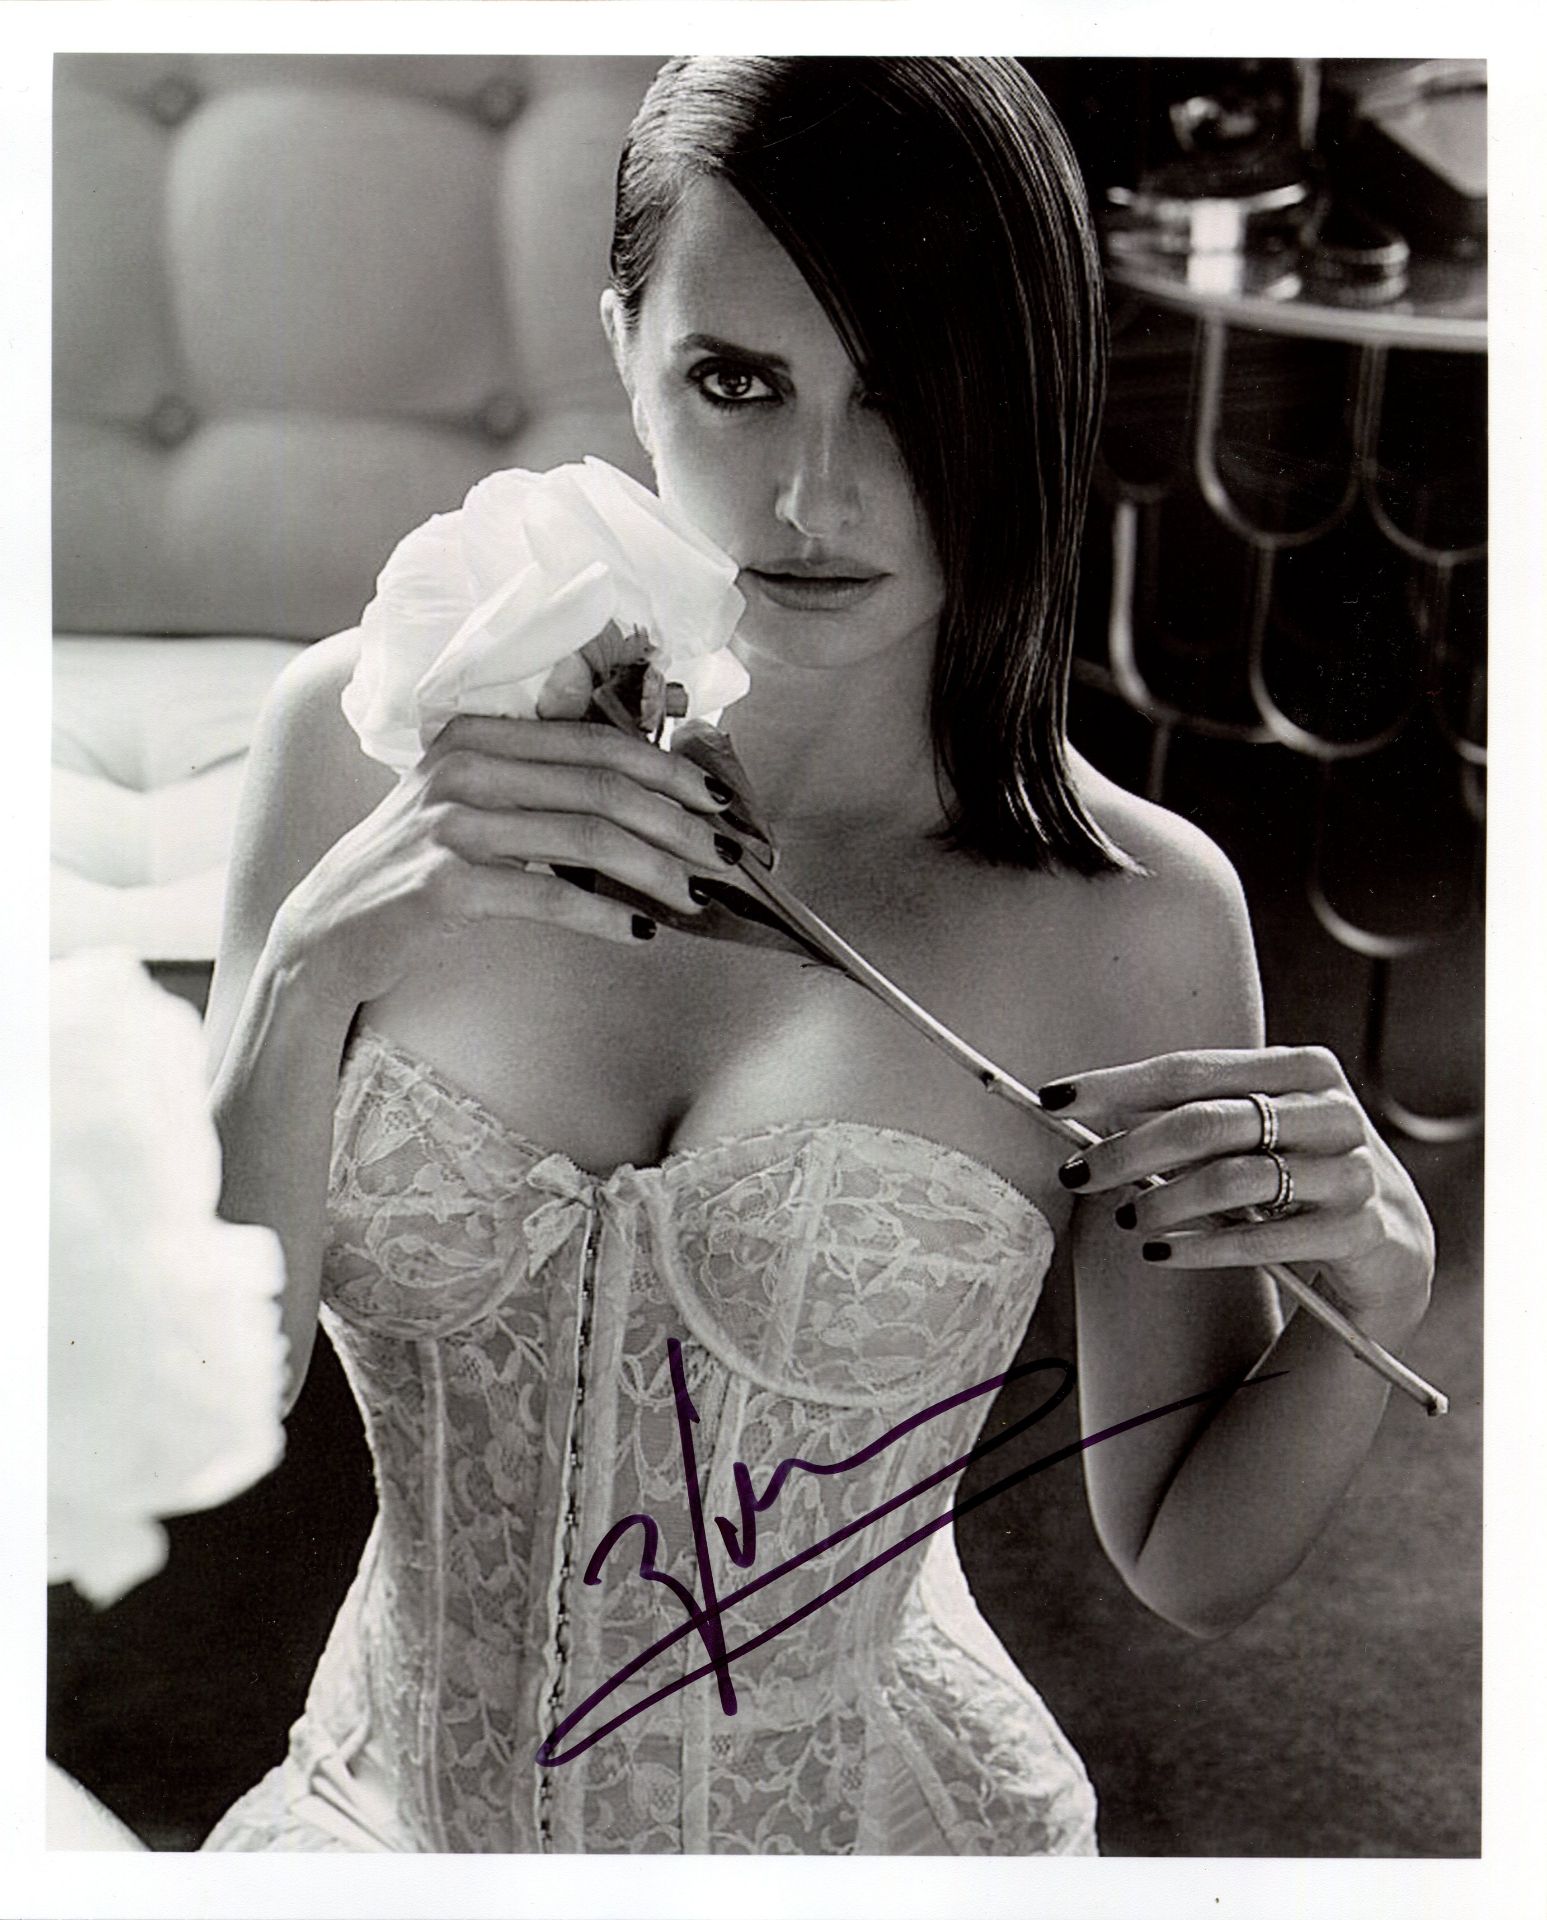 CRUZ PENELOPE: (1974- ) Spanish actress, Academy Award winner. A good signed 8 x 10 photograph by